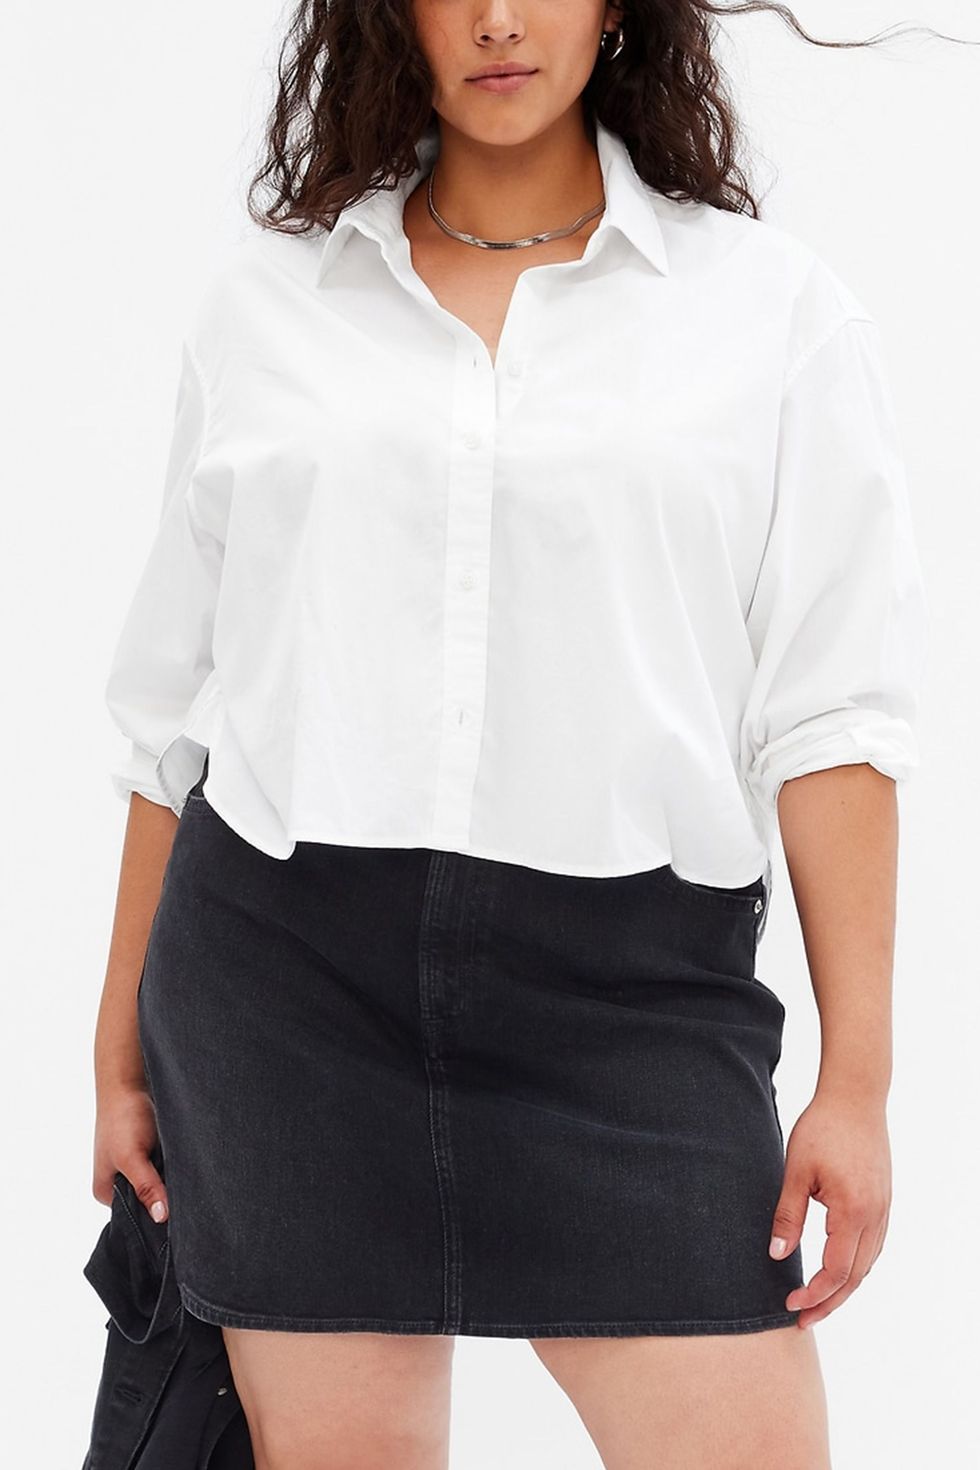 15 Best White Button-Down Shirts for Women — Best Button-Down Shirts